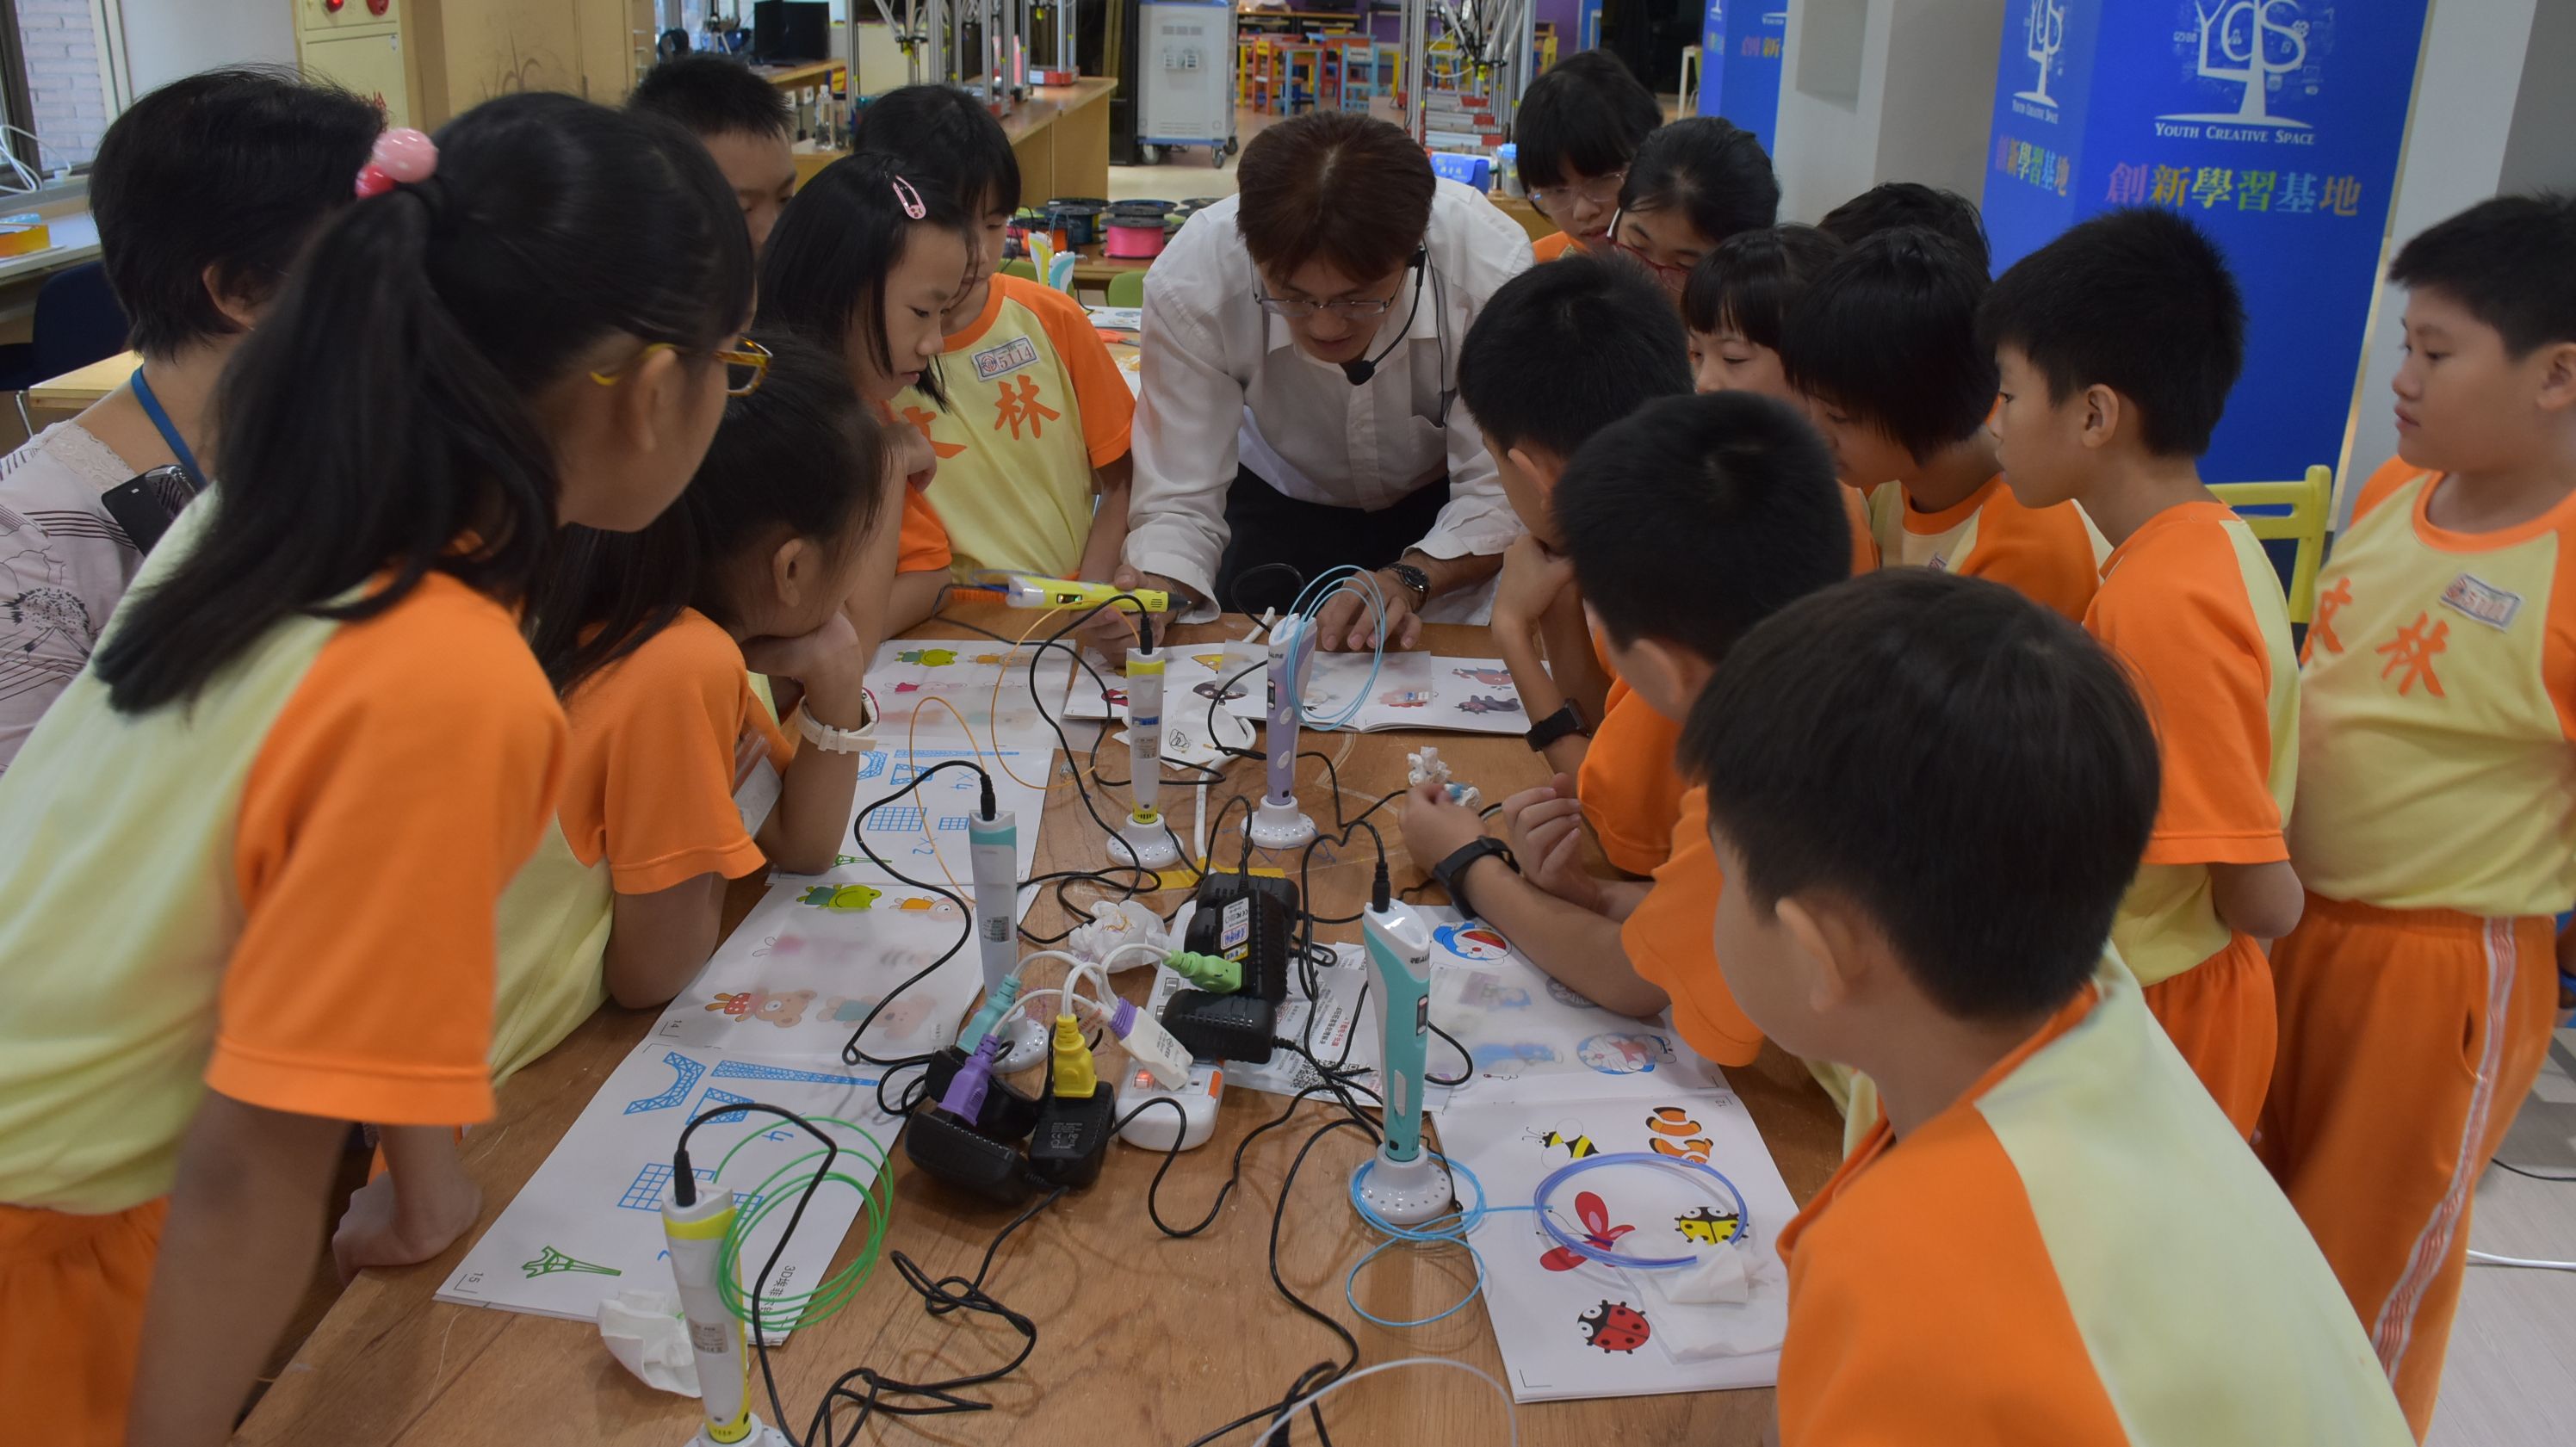 Students taking part in the maker school field trip